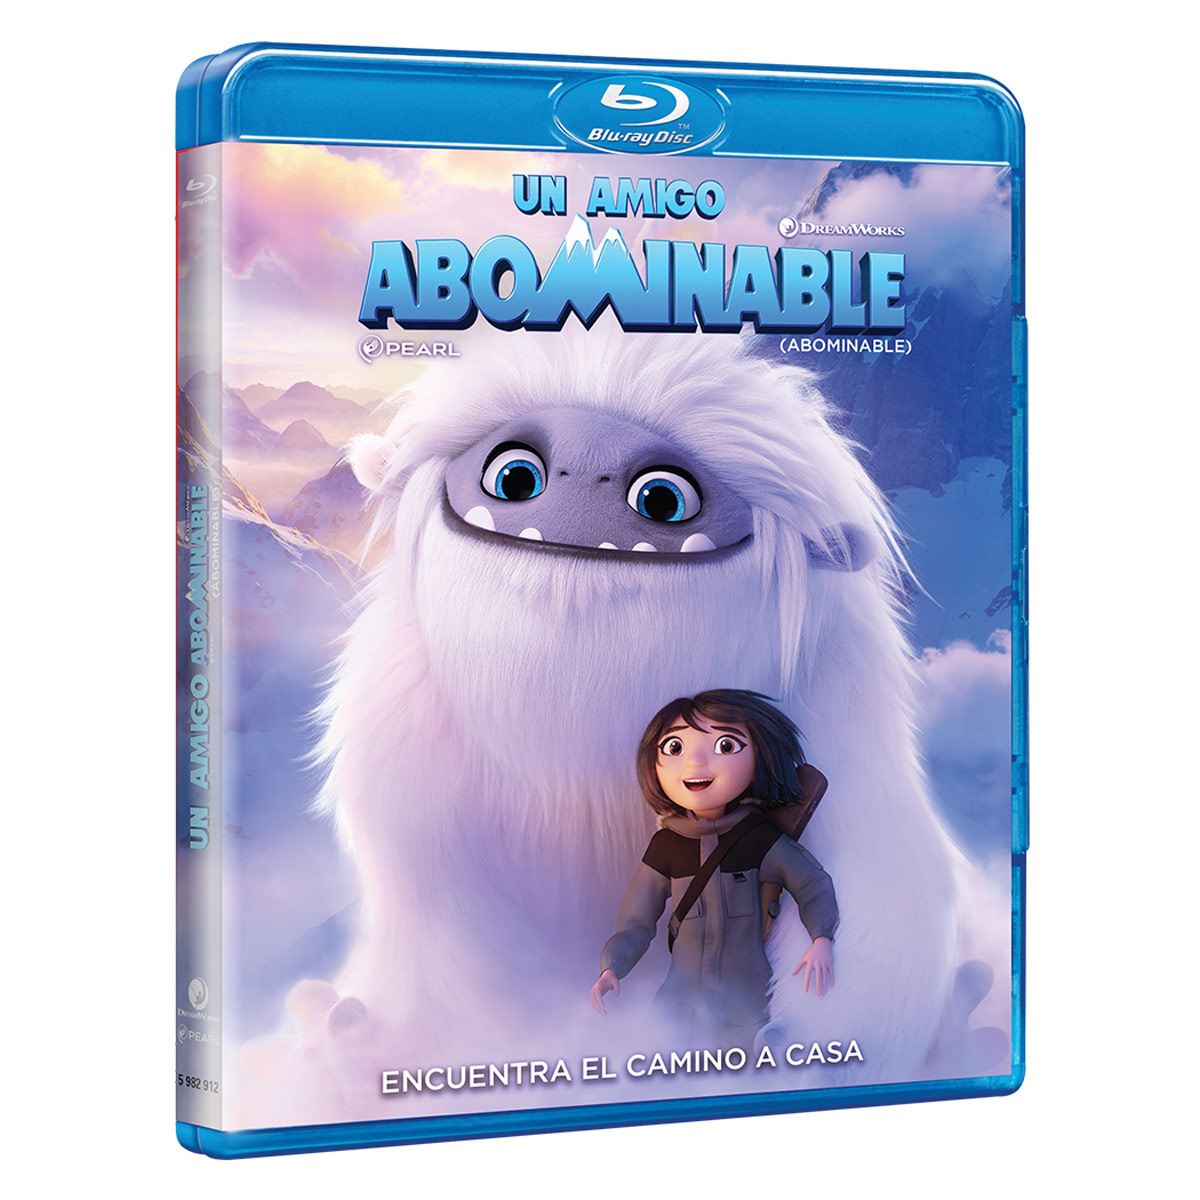 Mattel Disney Pixar Monsters, Abominable Snowman Action Figure 8